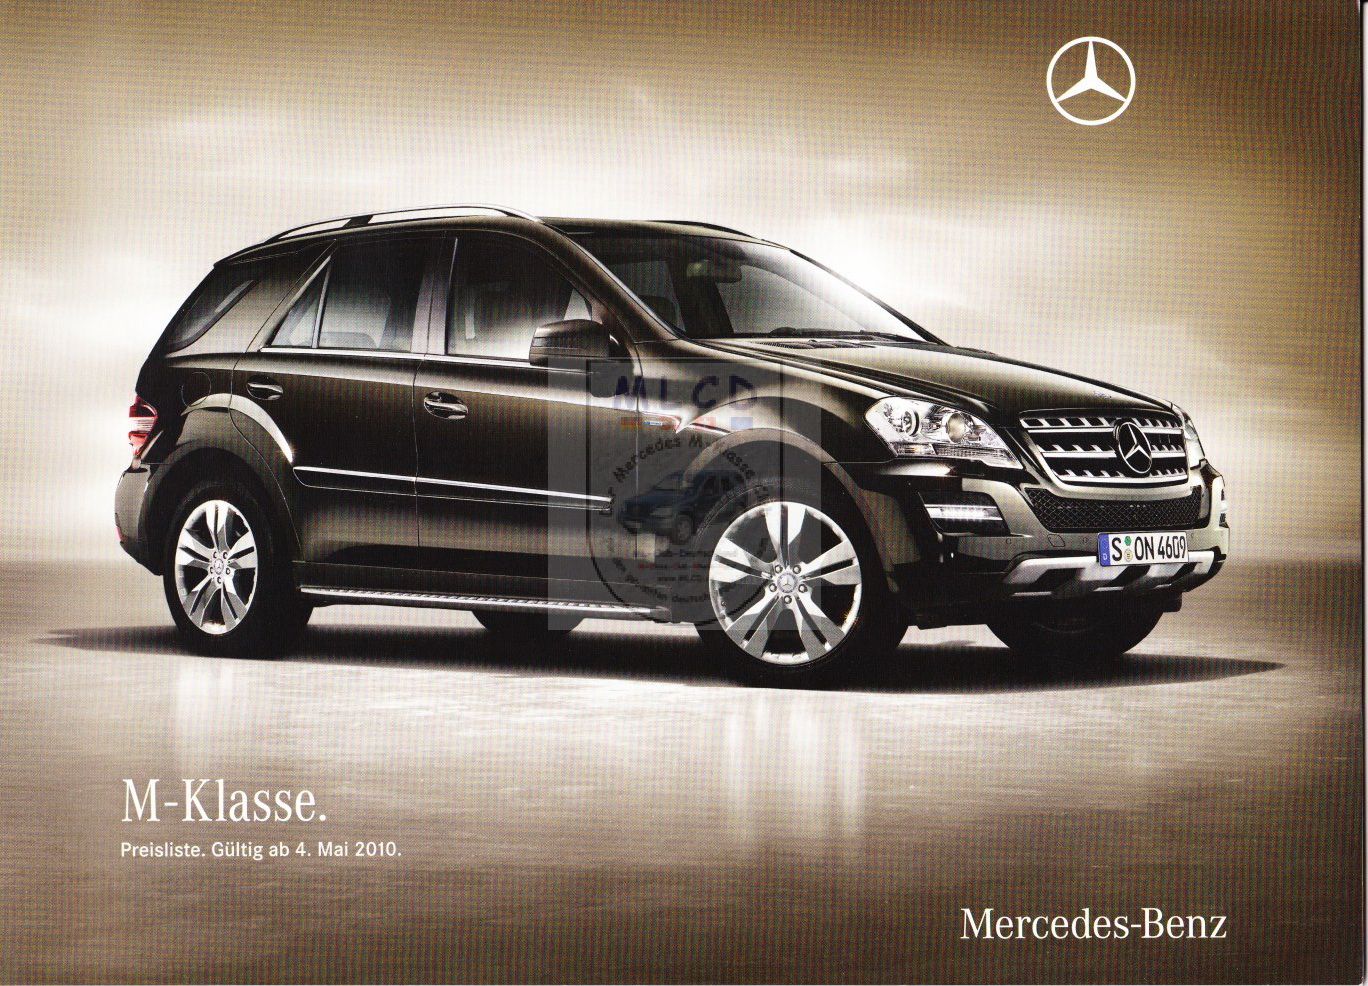 Mercedes-Benz W164 M-Klasse. Preisliste. 2010 05 Mai